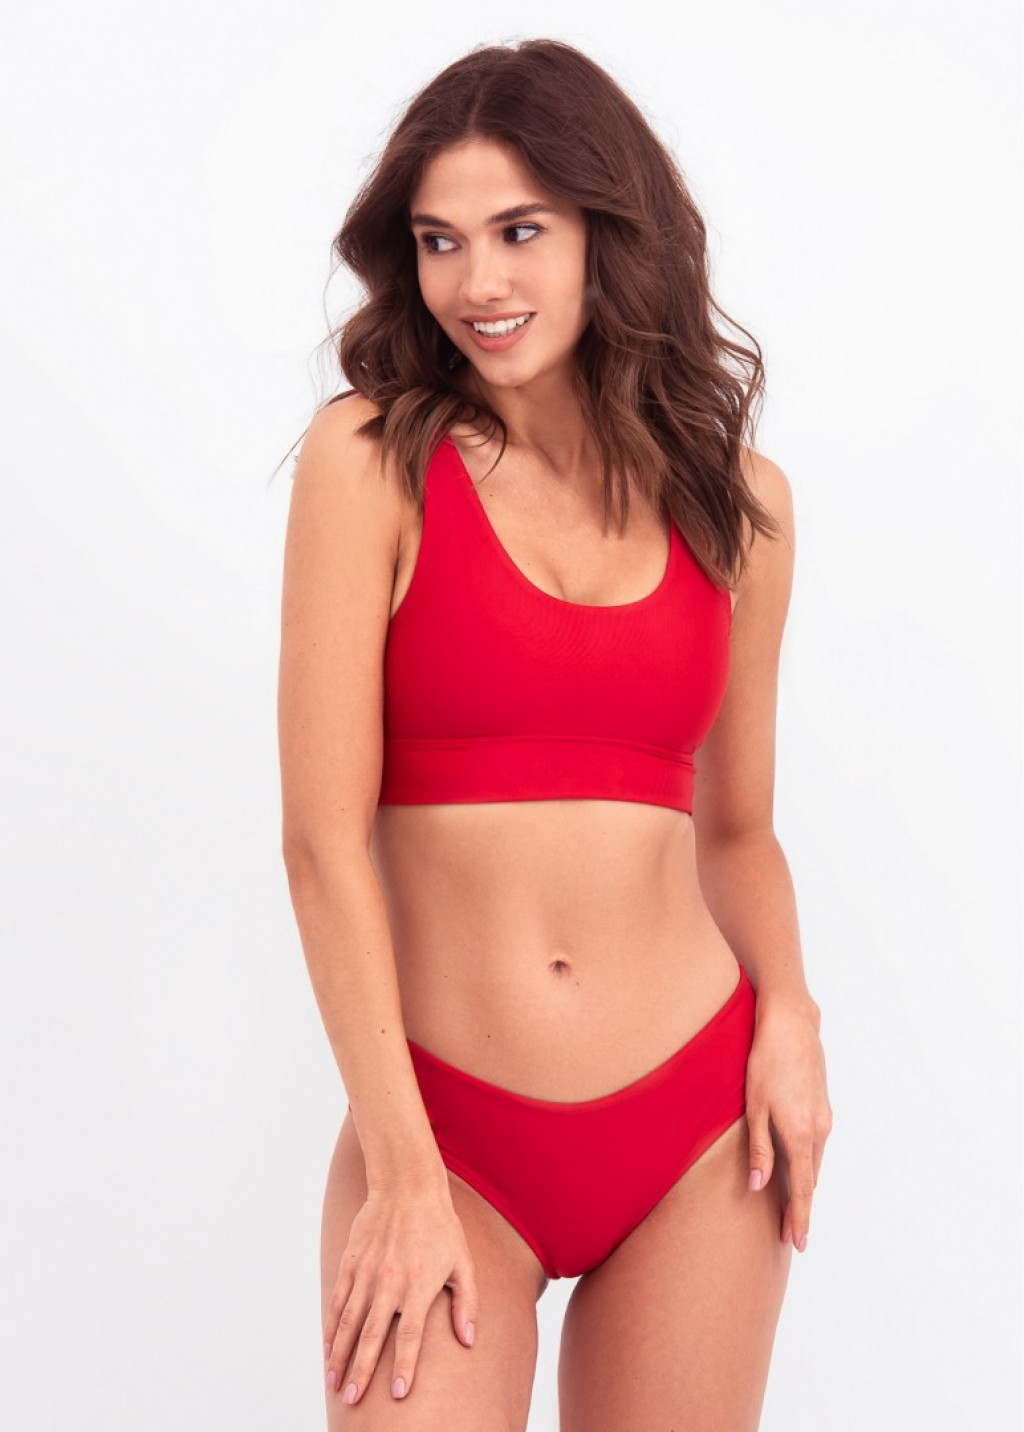 Red Brazilian Bikini Bottom And Sports Top